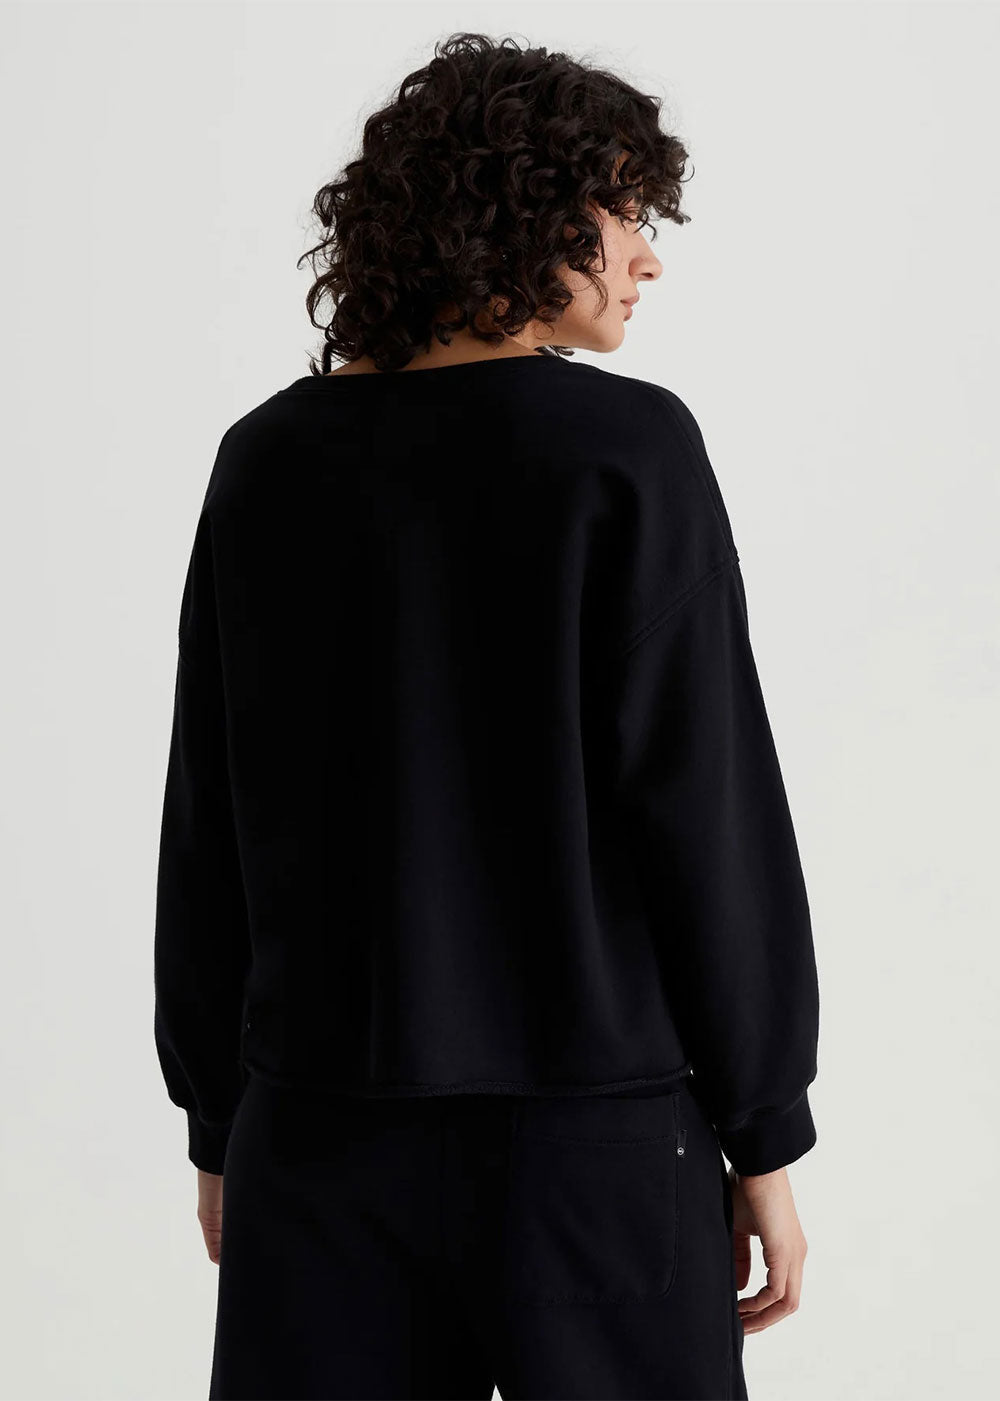 Willow Sweatshirt - True Black - AG Jeans - Danali - ELT71449TBC